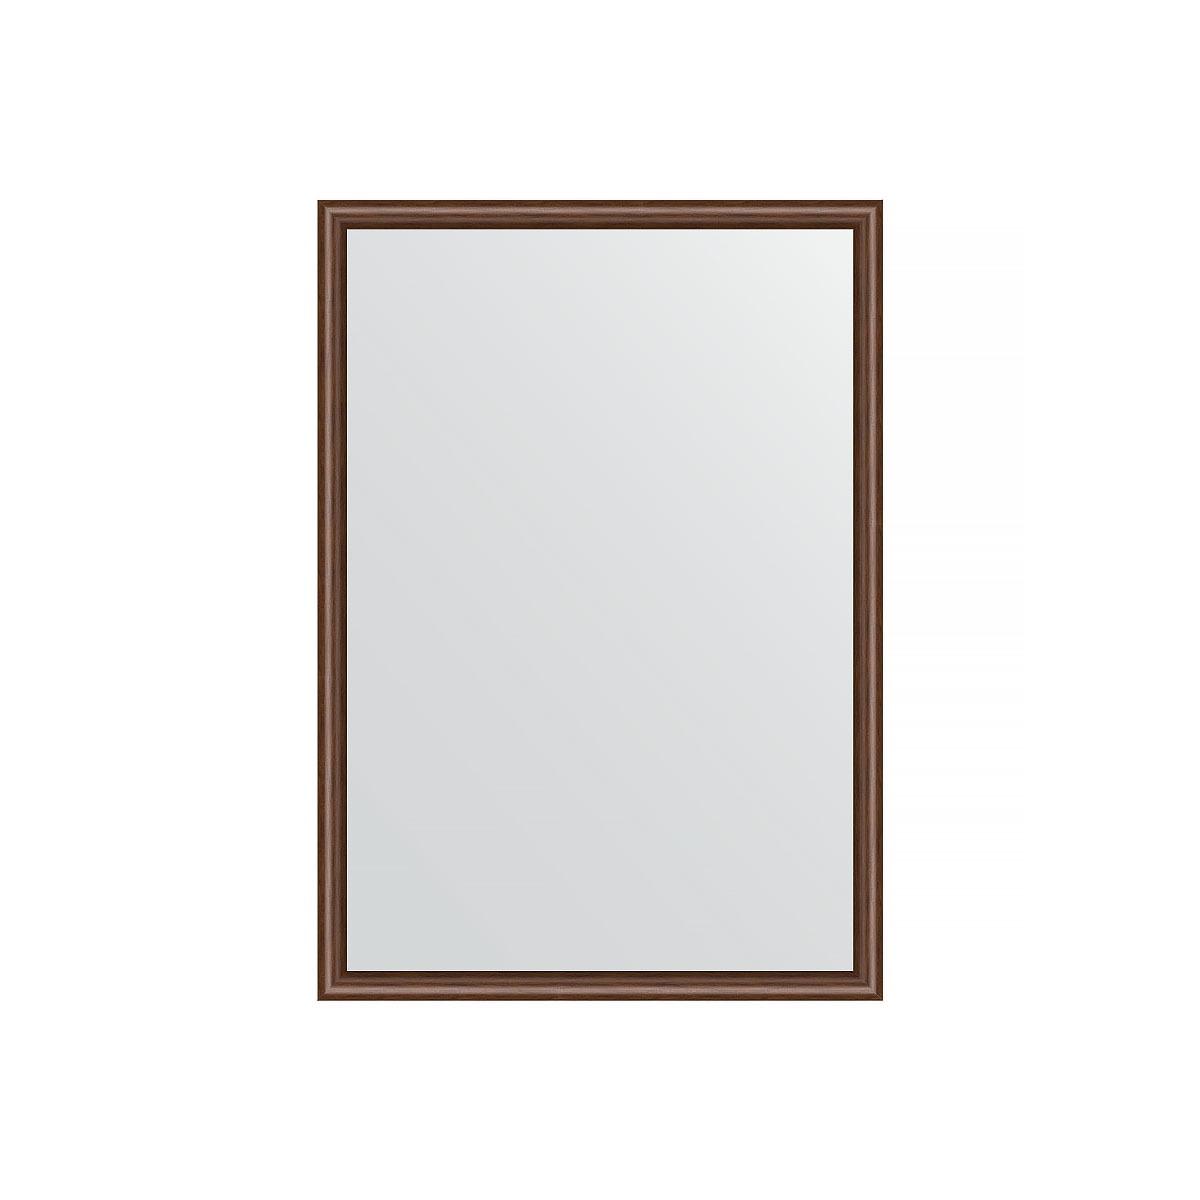 Зеркало в багетной раме Evoform орех 22 мм 48х68 см зеркало 48х68 см сосна evoform definite by 0618